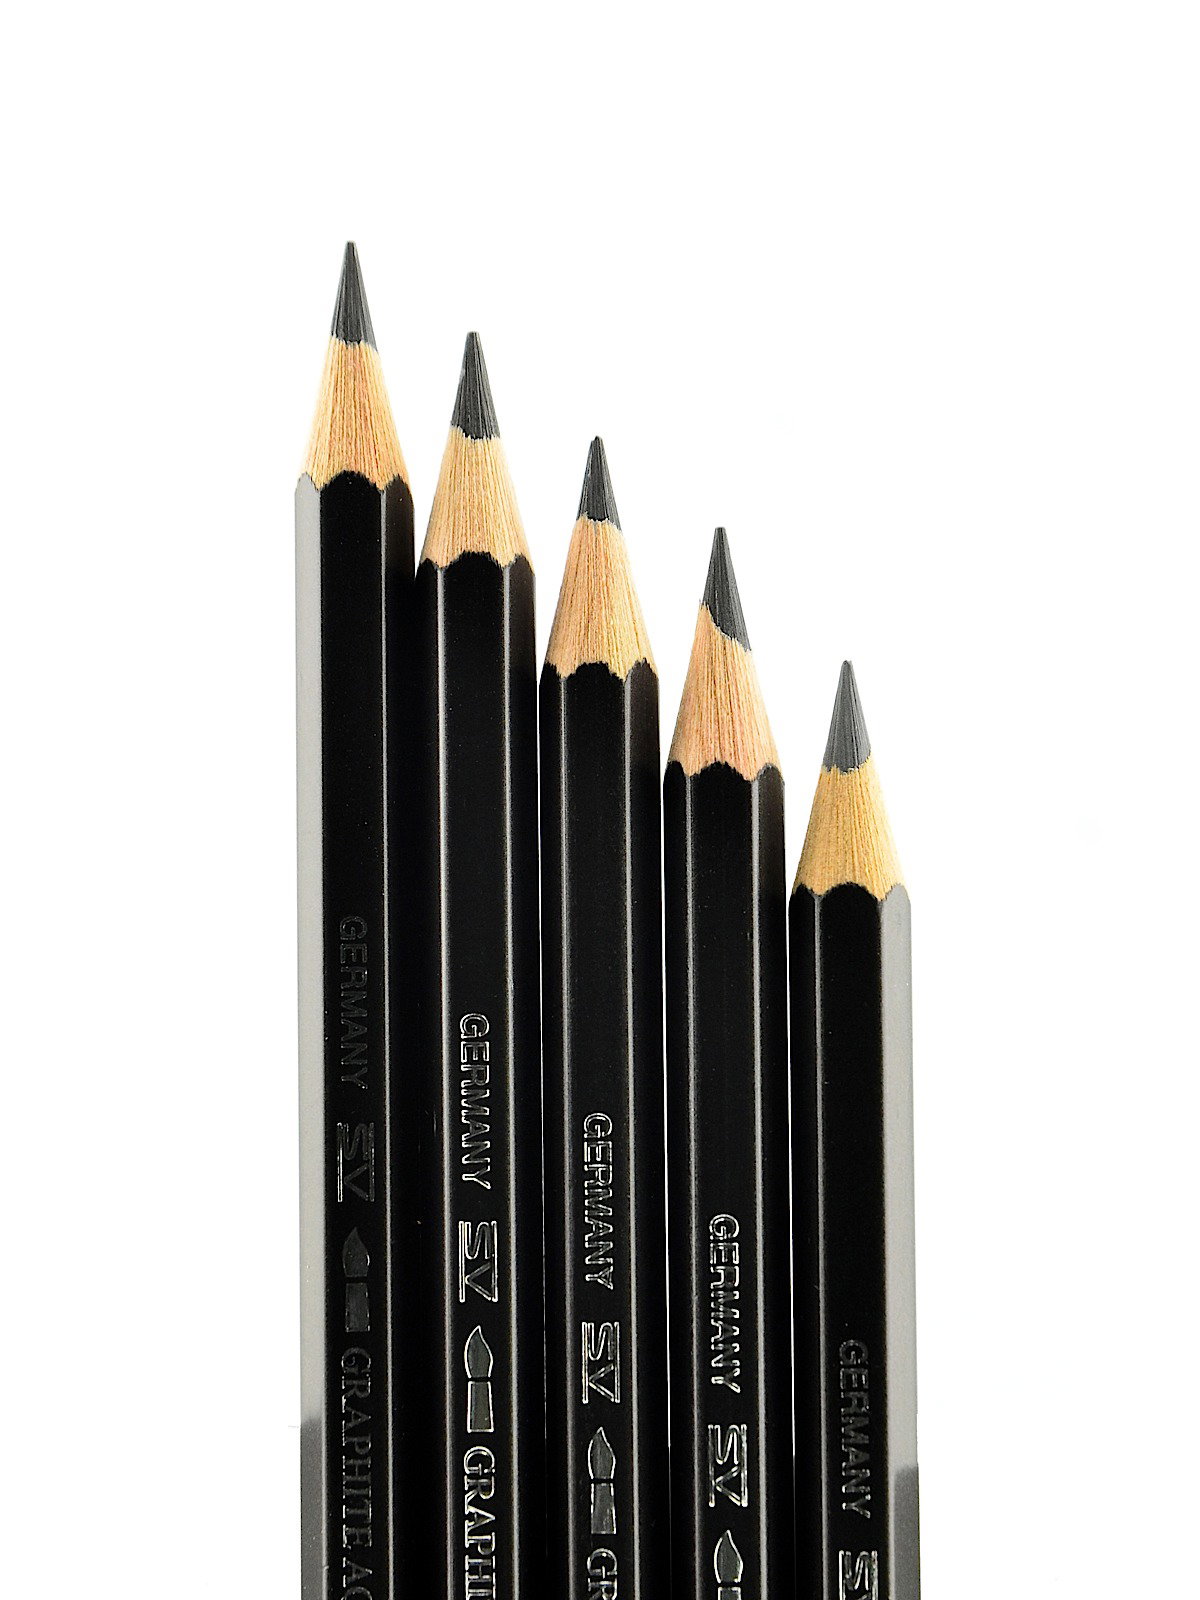 Flipkart.com | शॉप उनकले Art FABER CASTELL Drawing Graded Pencil Set - 2B,  3B, 4B, 5B, 6B and 8B (Pack of 6) + Blending/Smudging Stumps Pack of 6  (Size 1 to 6) +